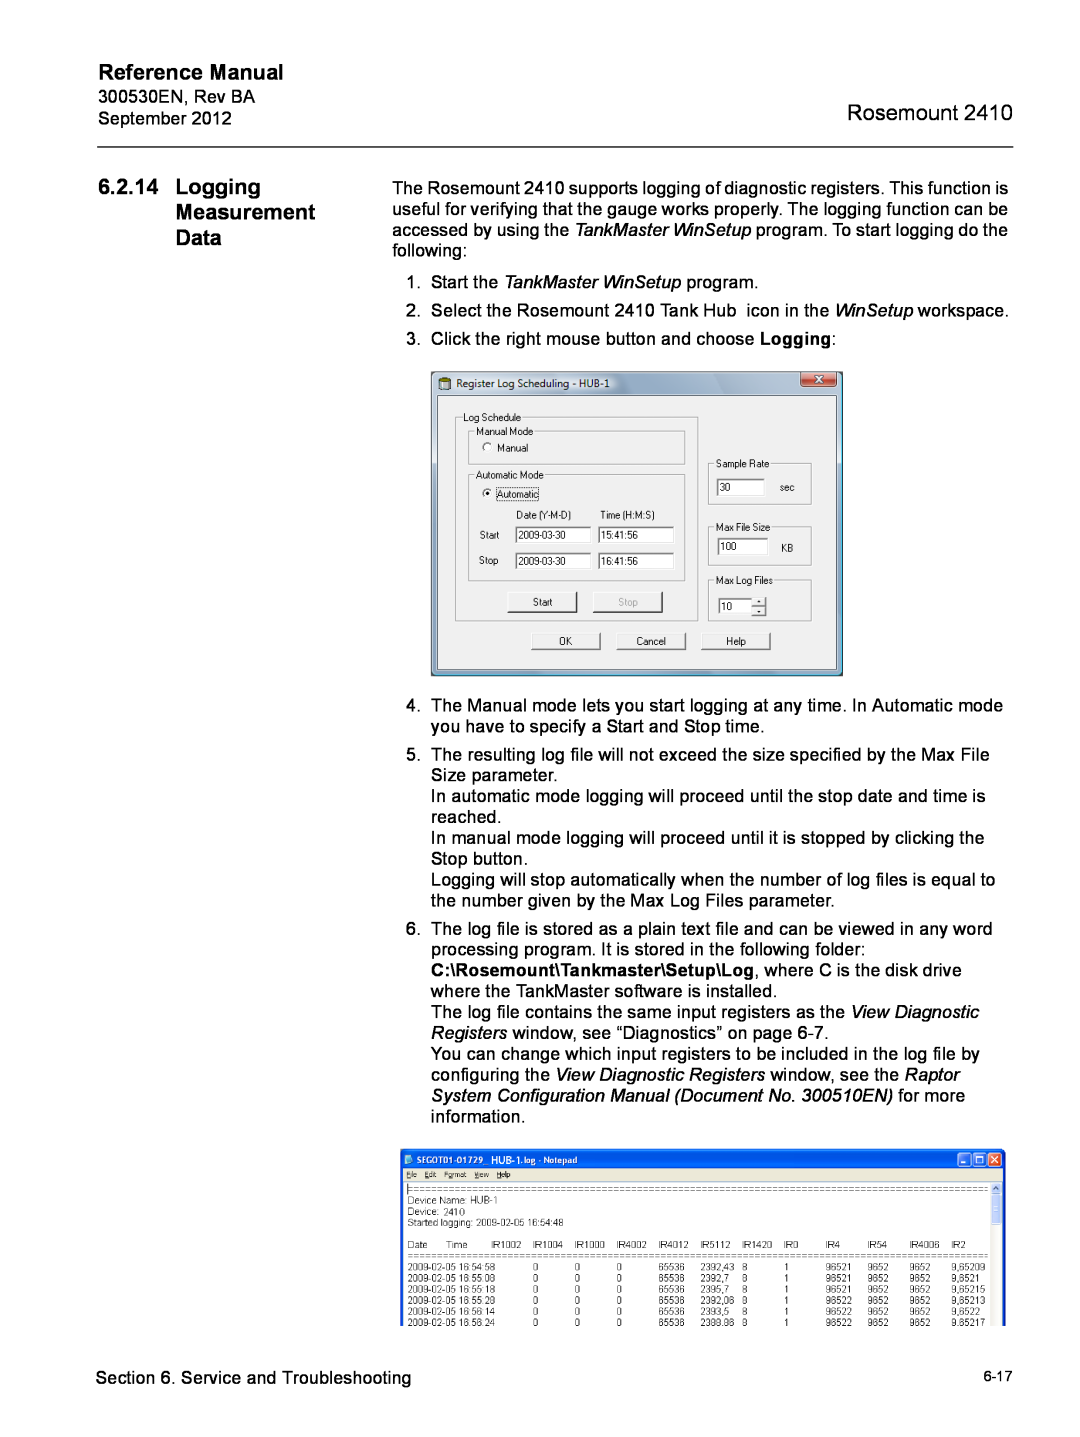 Emerson Process Management Rosemount 2410 manual Logging Measurement Data, Reference Manual 